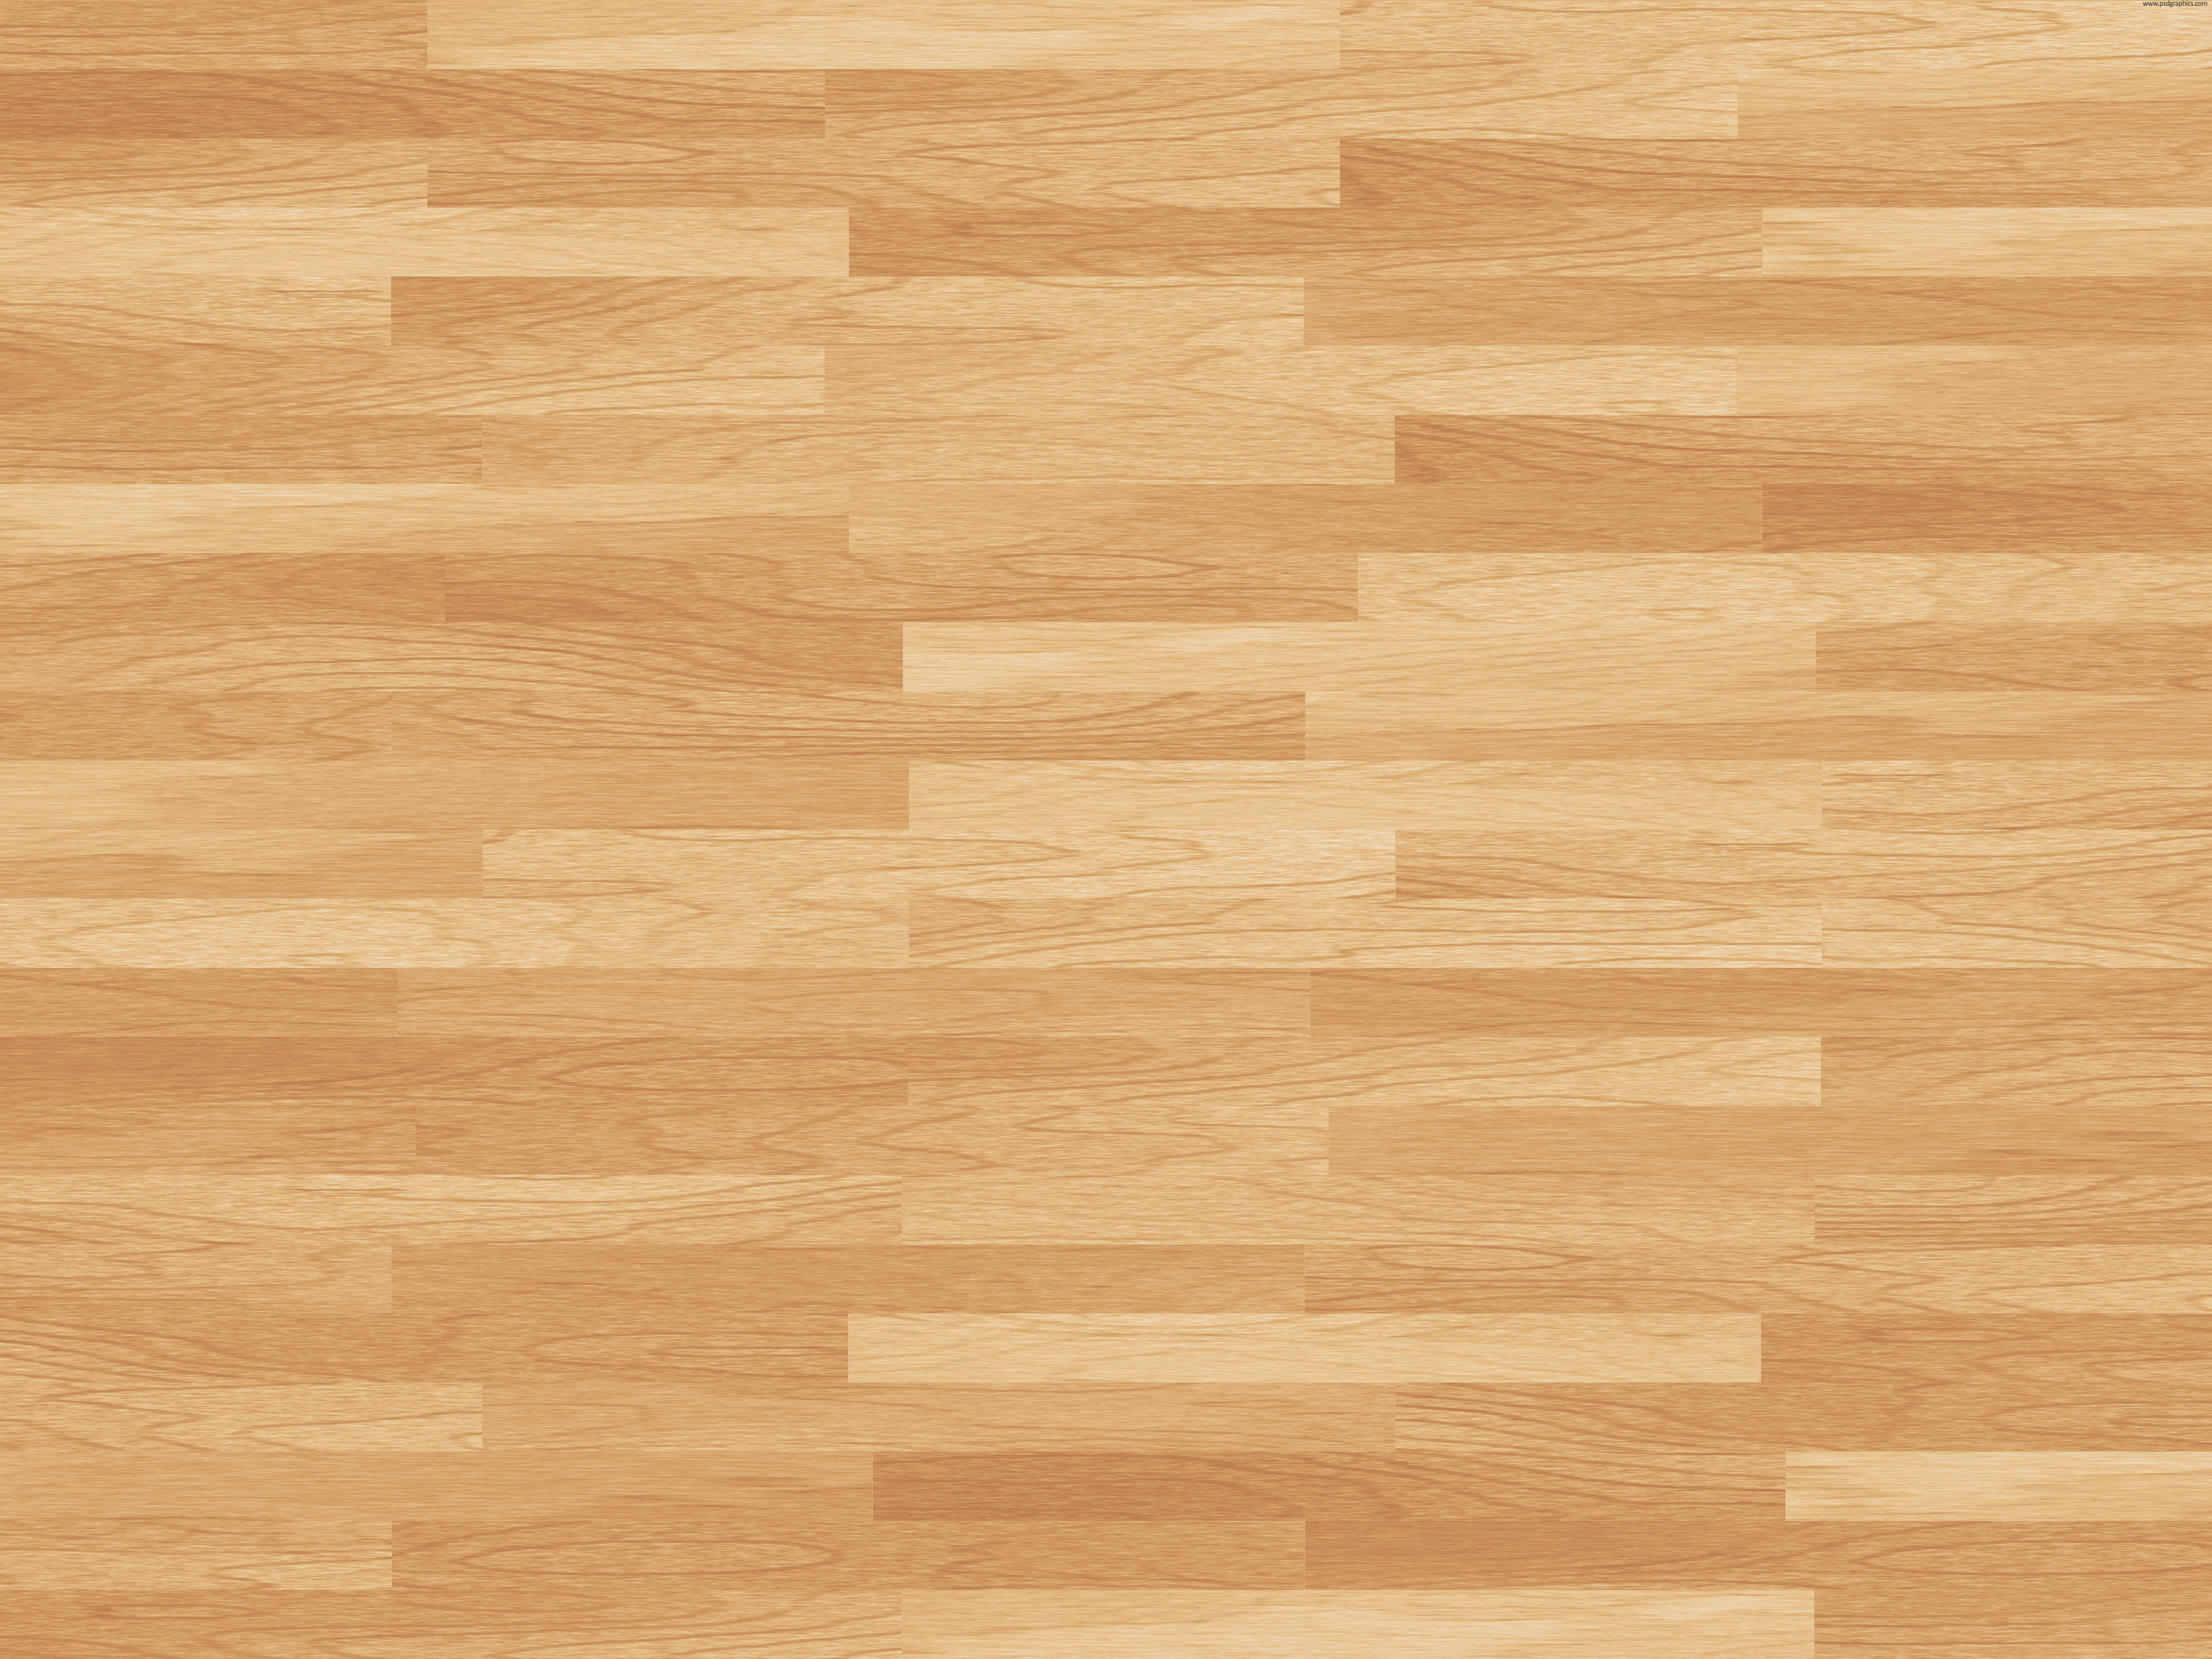 Basketball Court Floor Texture